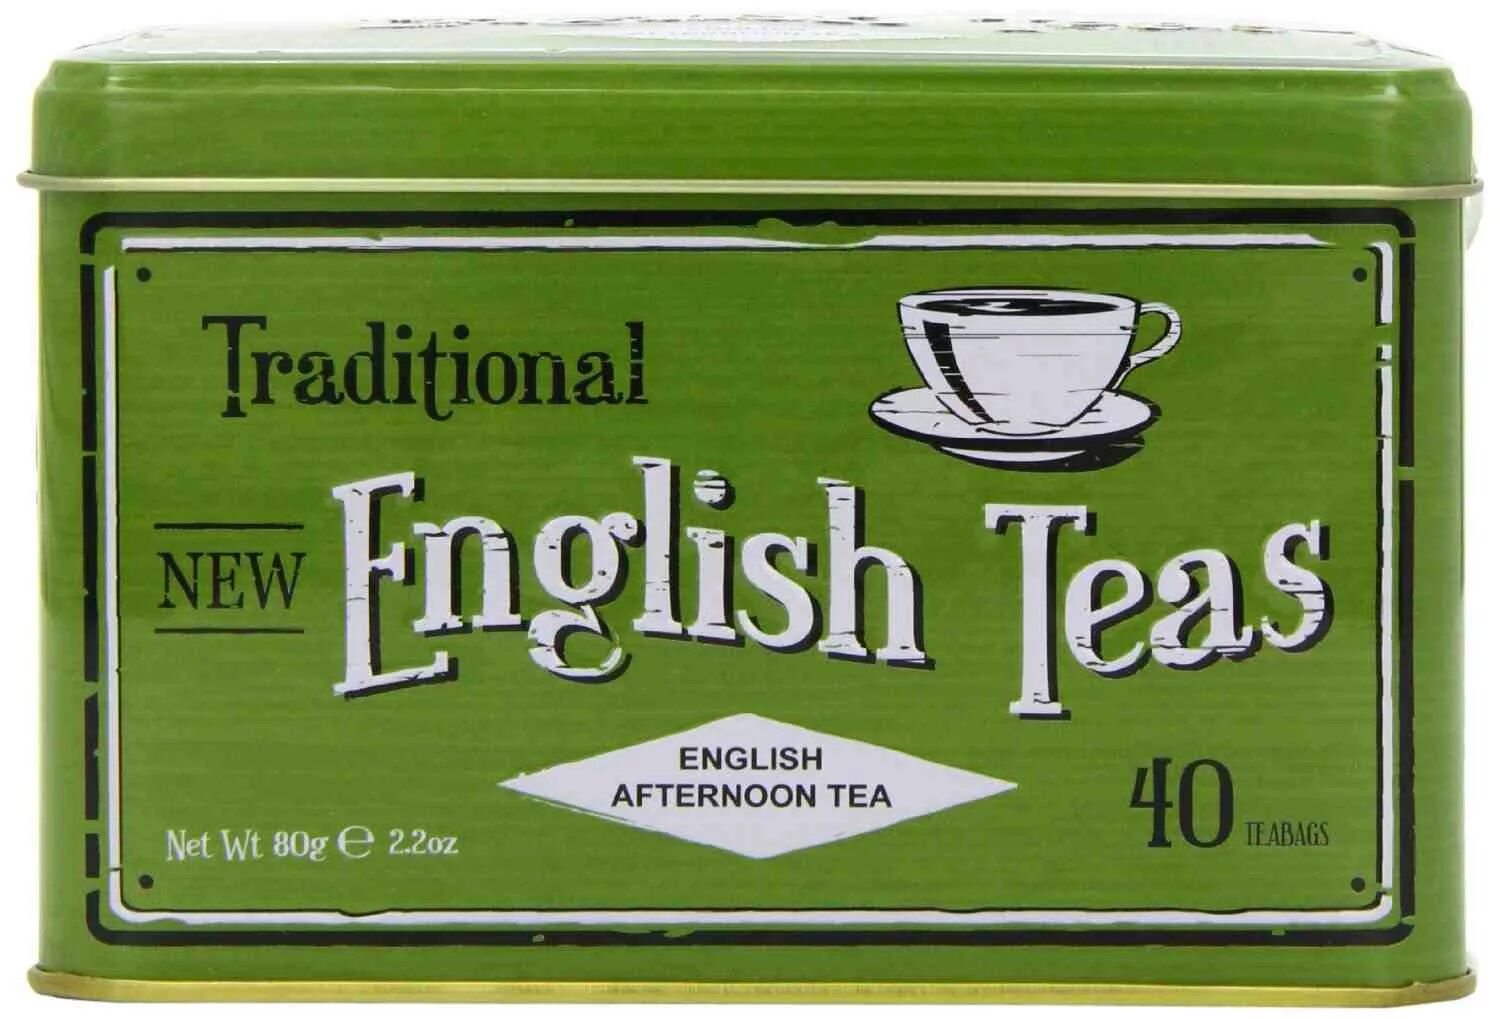 English afternoon. Английский чай марки. Tea чай английский. Британский чай. English afternoon чай.